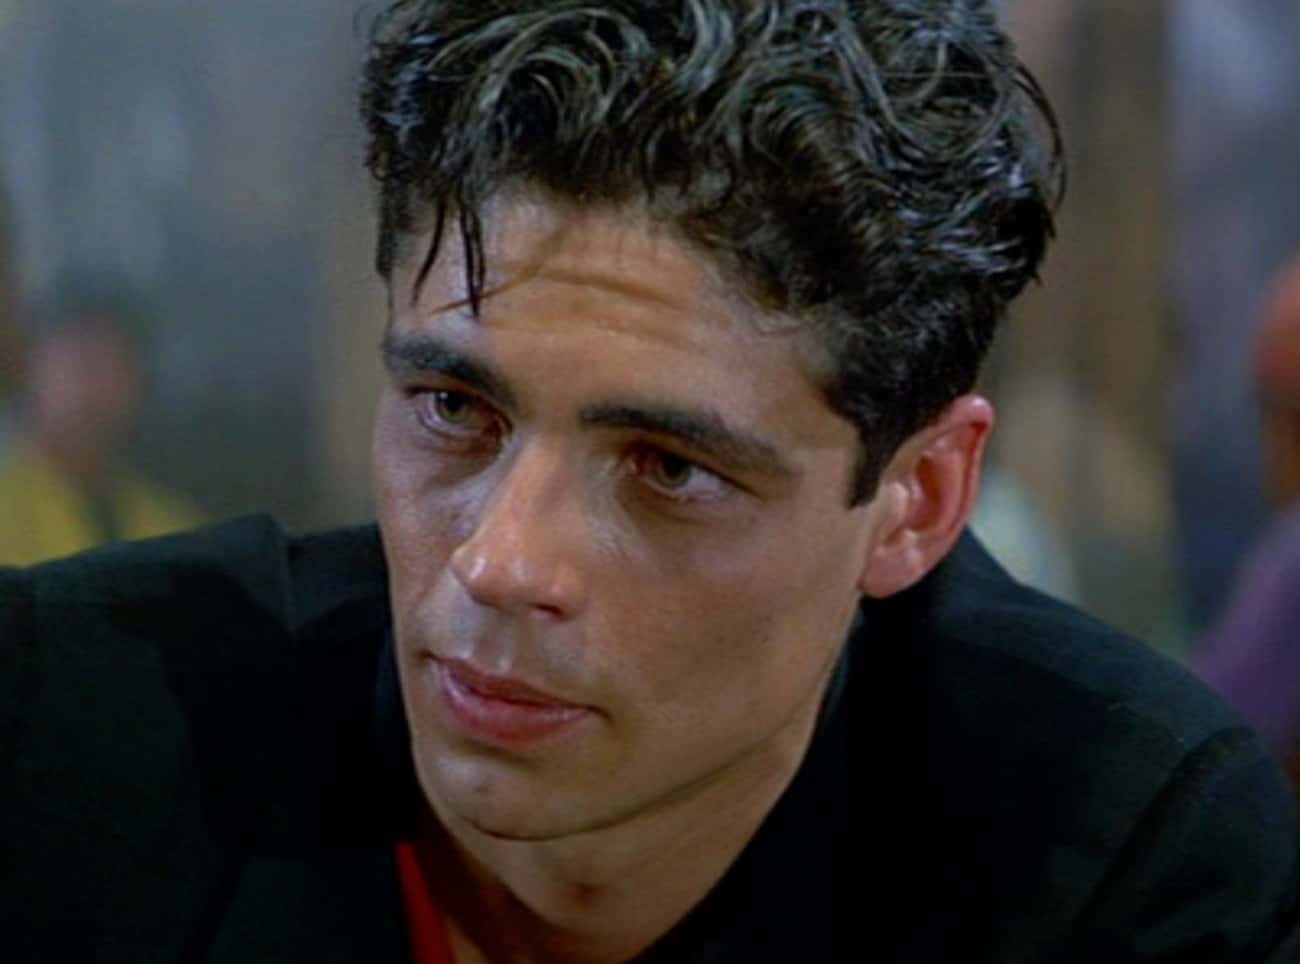 Young Benicio Del Toro in Black Sports Coat and Red Shirt